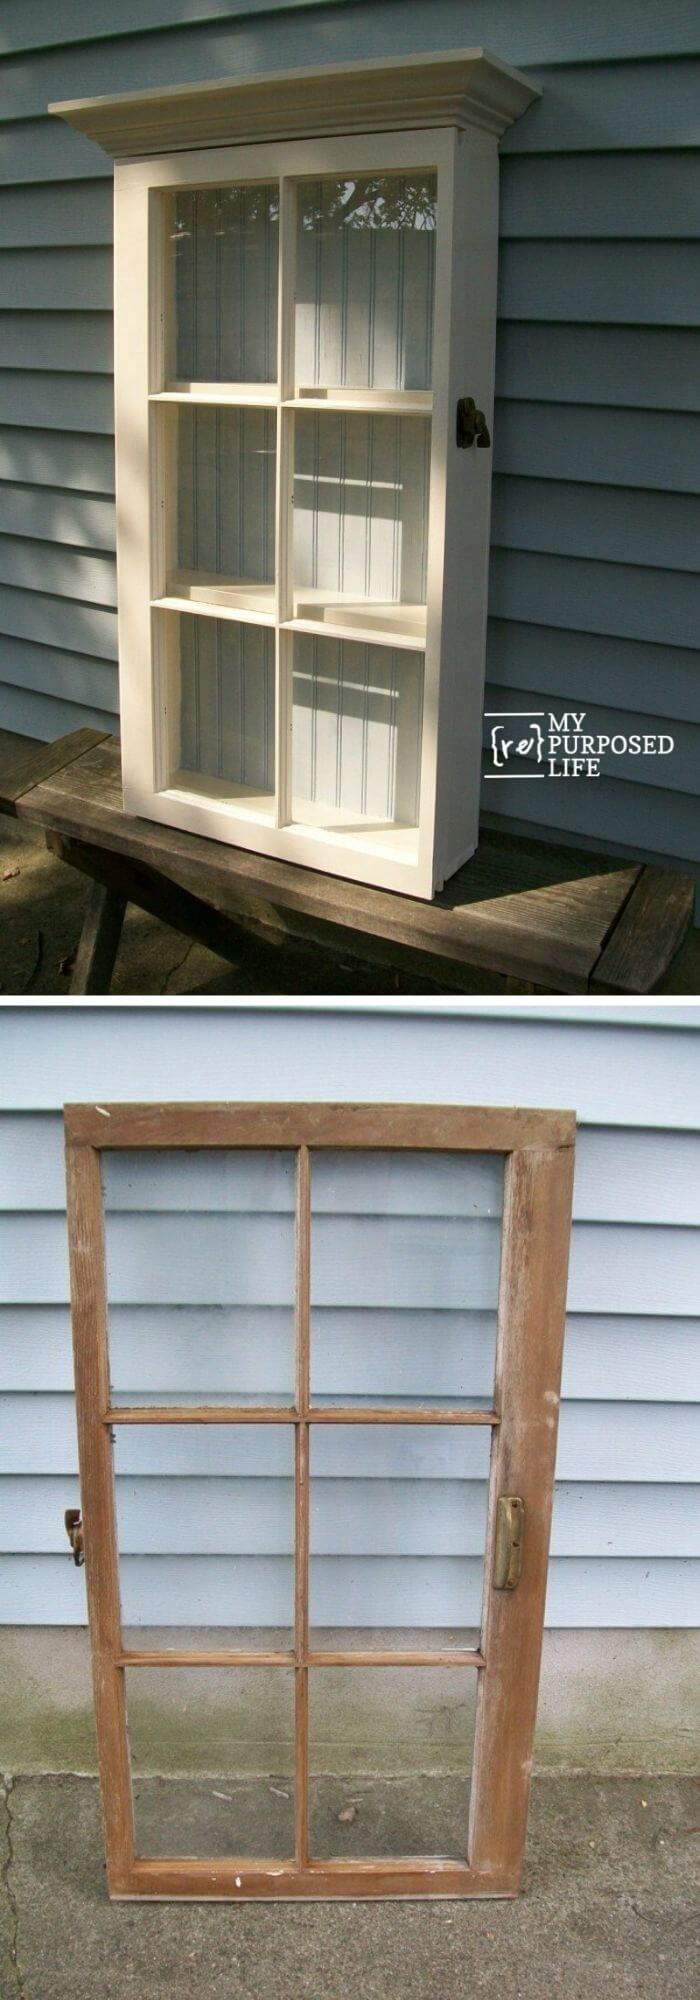 3 repurposed old window ideas